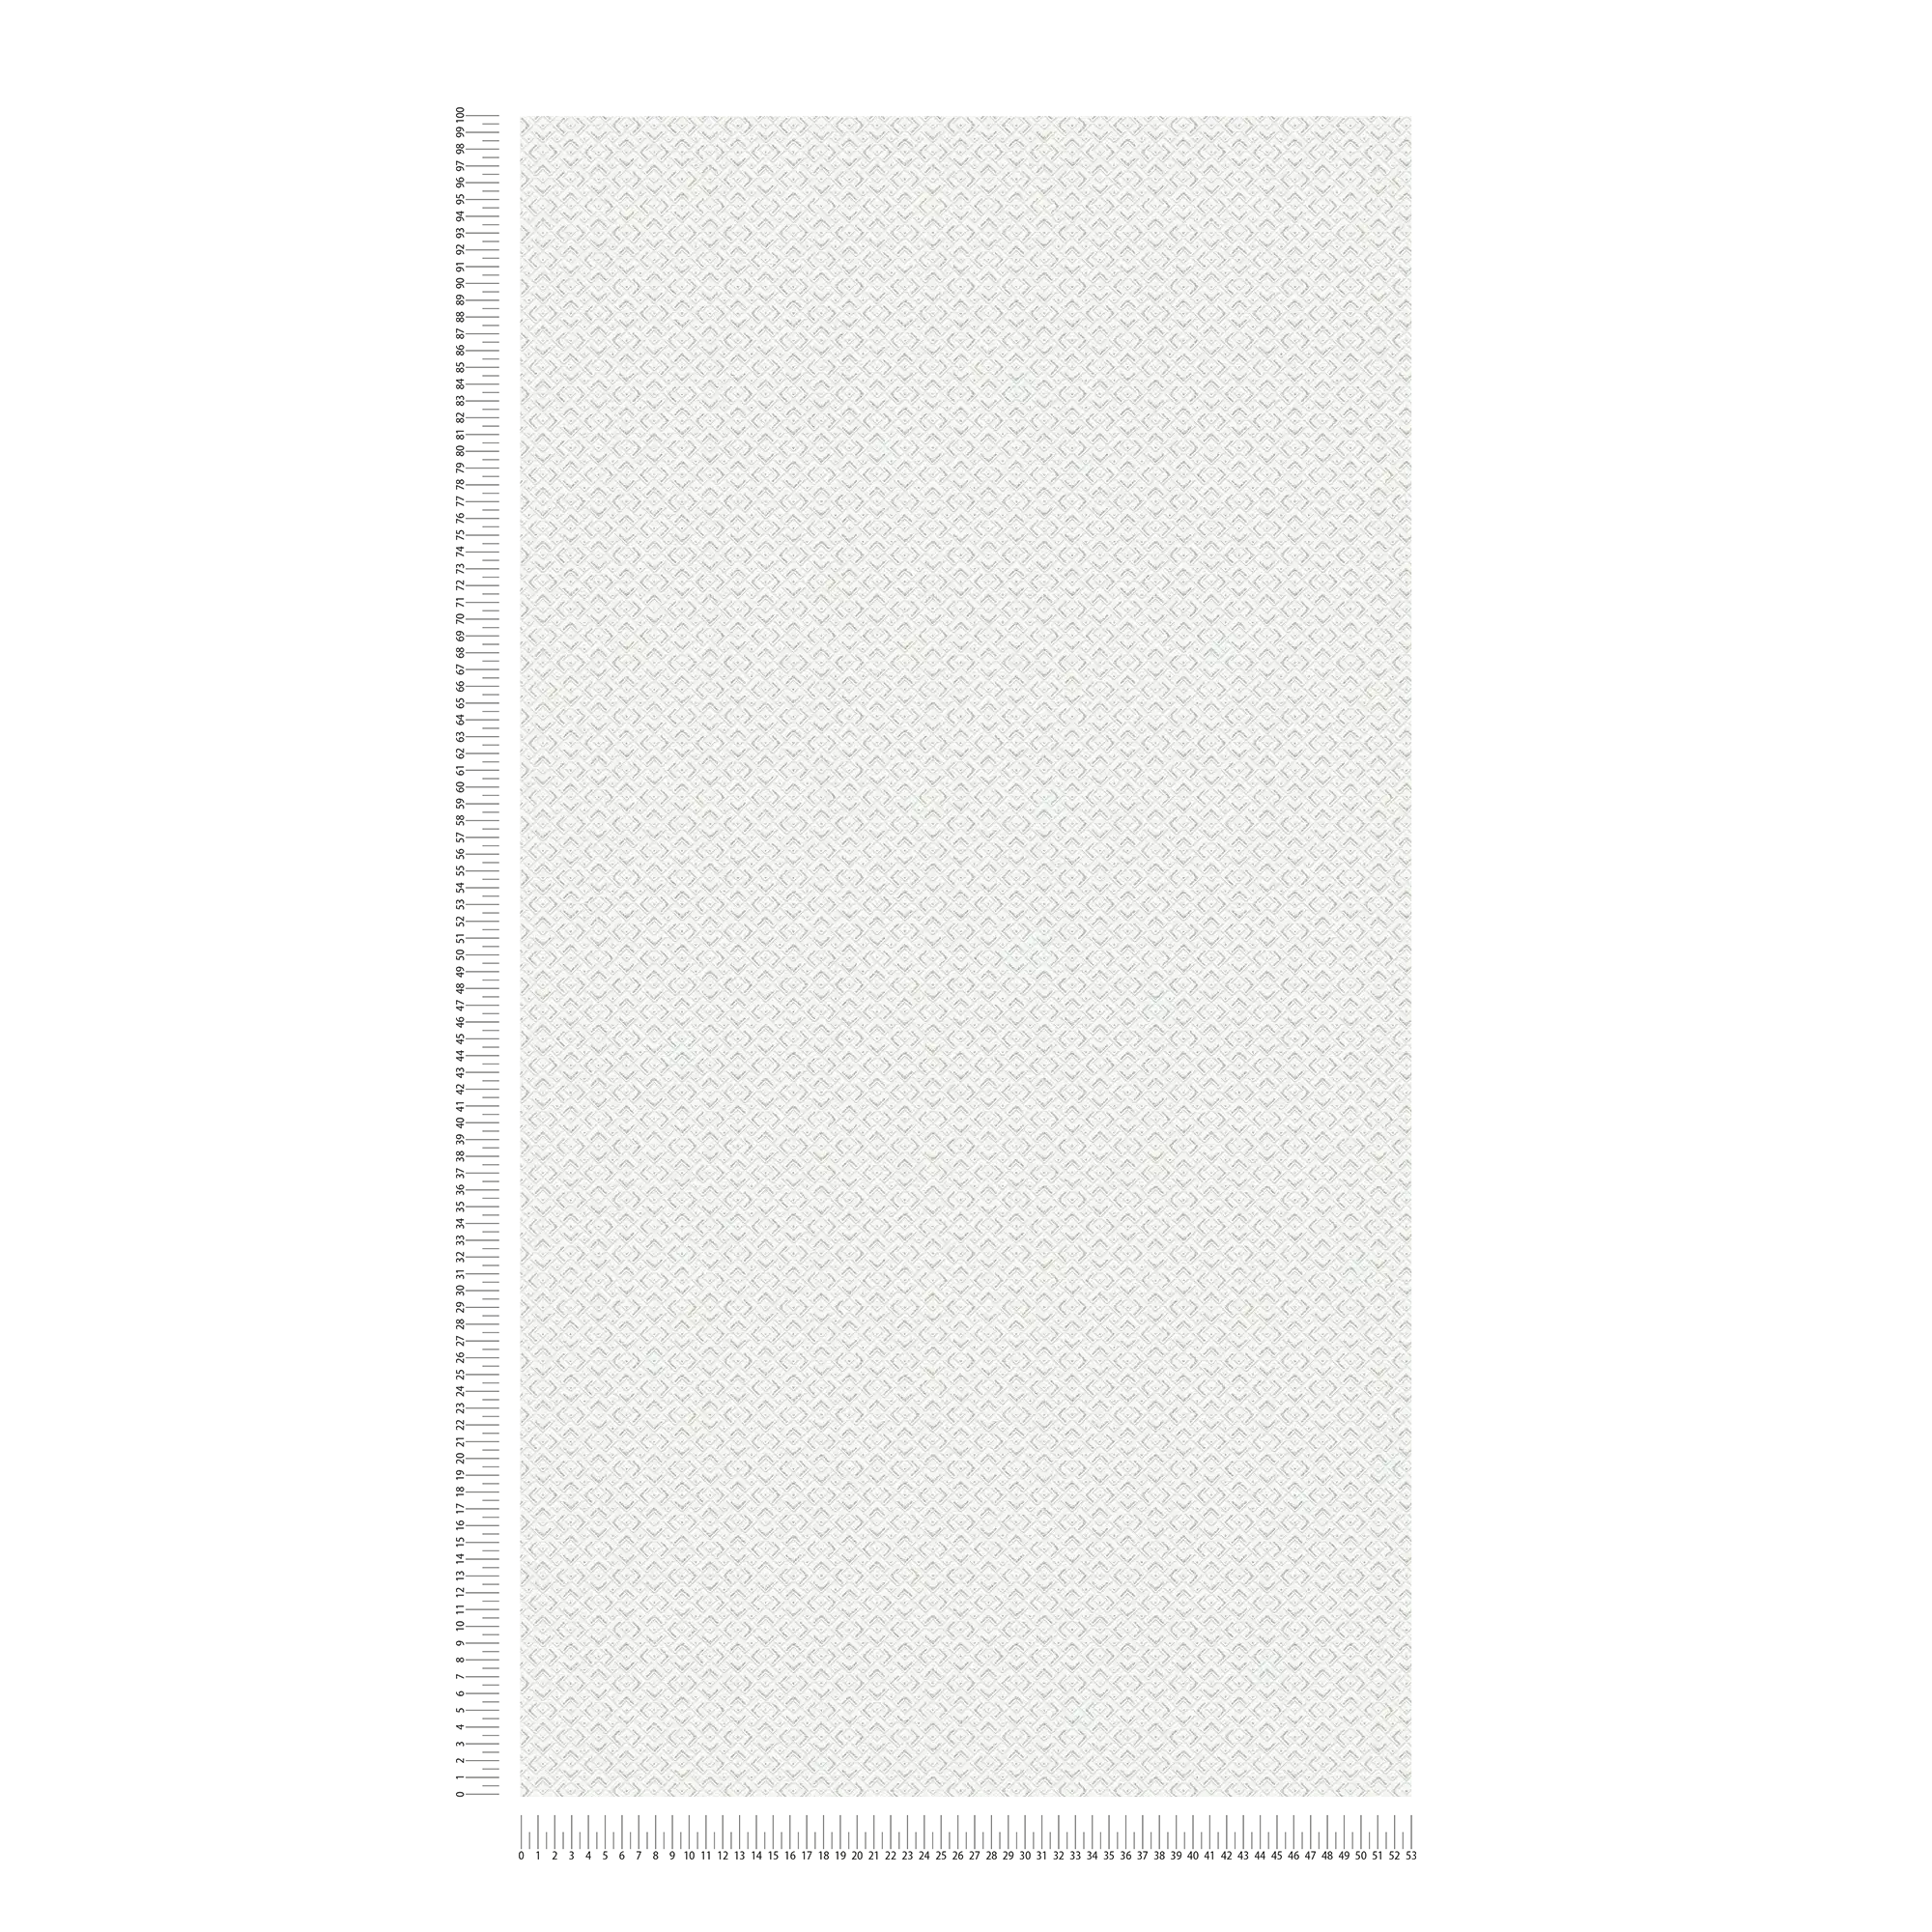             Wallpaper White Tone On Tone Pattern & Silver Accent - White
        